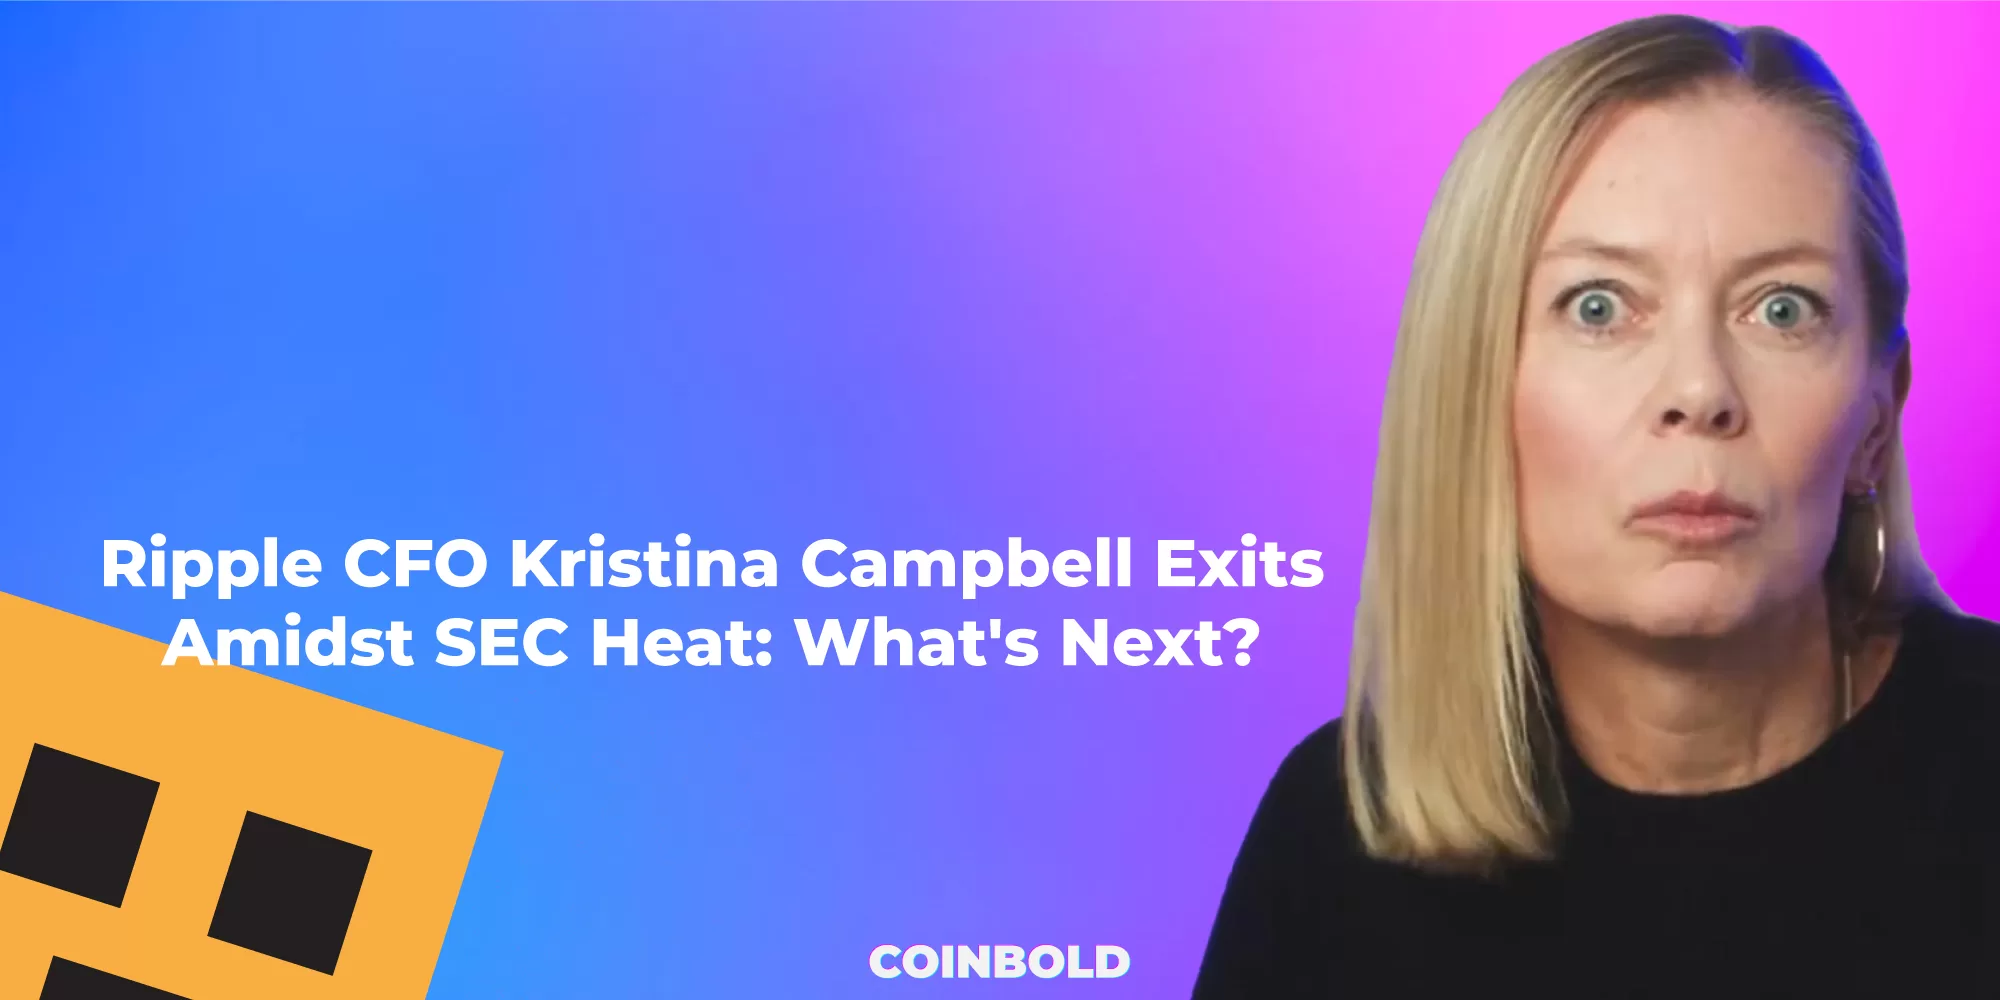 Ripple CFO Kristina Campbell Exits Amidst SEC Heat What's Next?